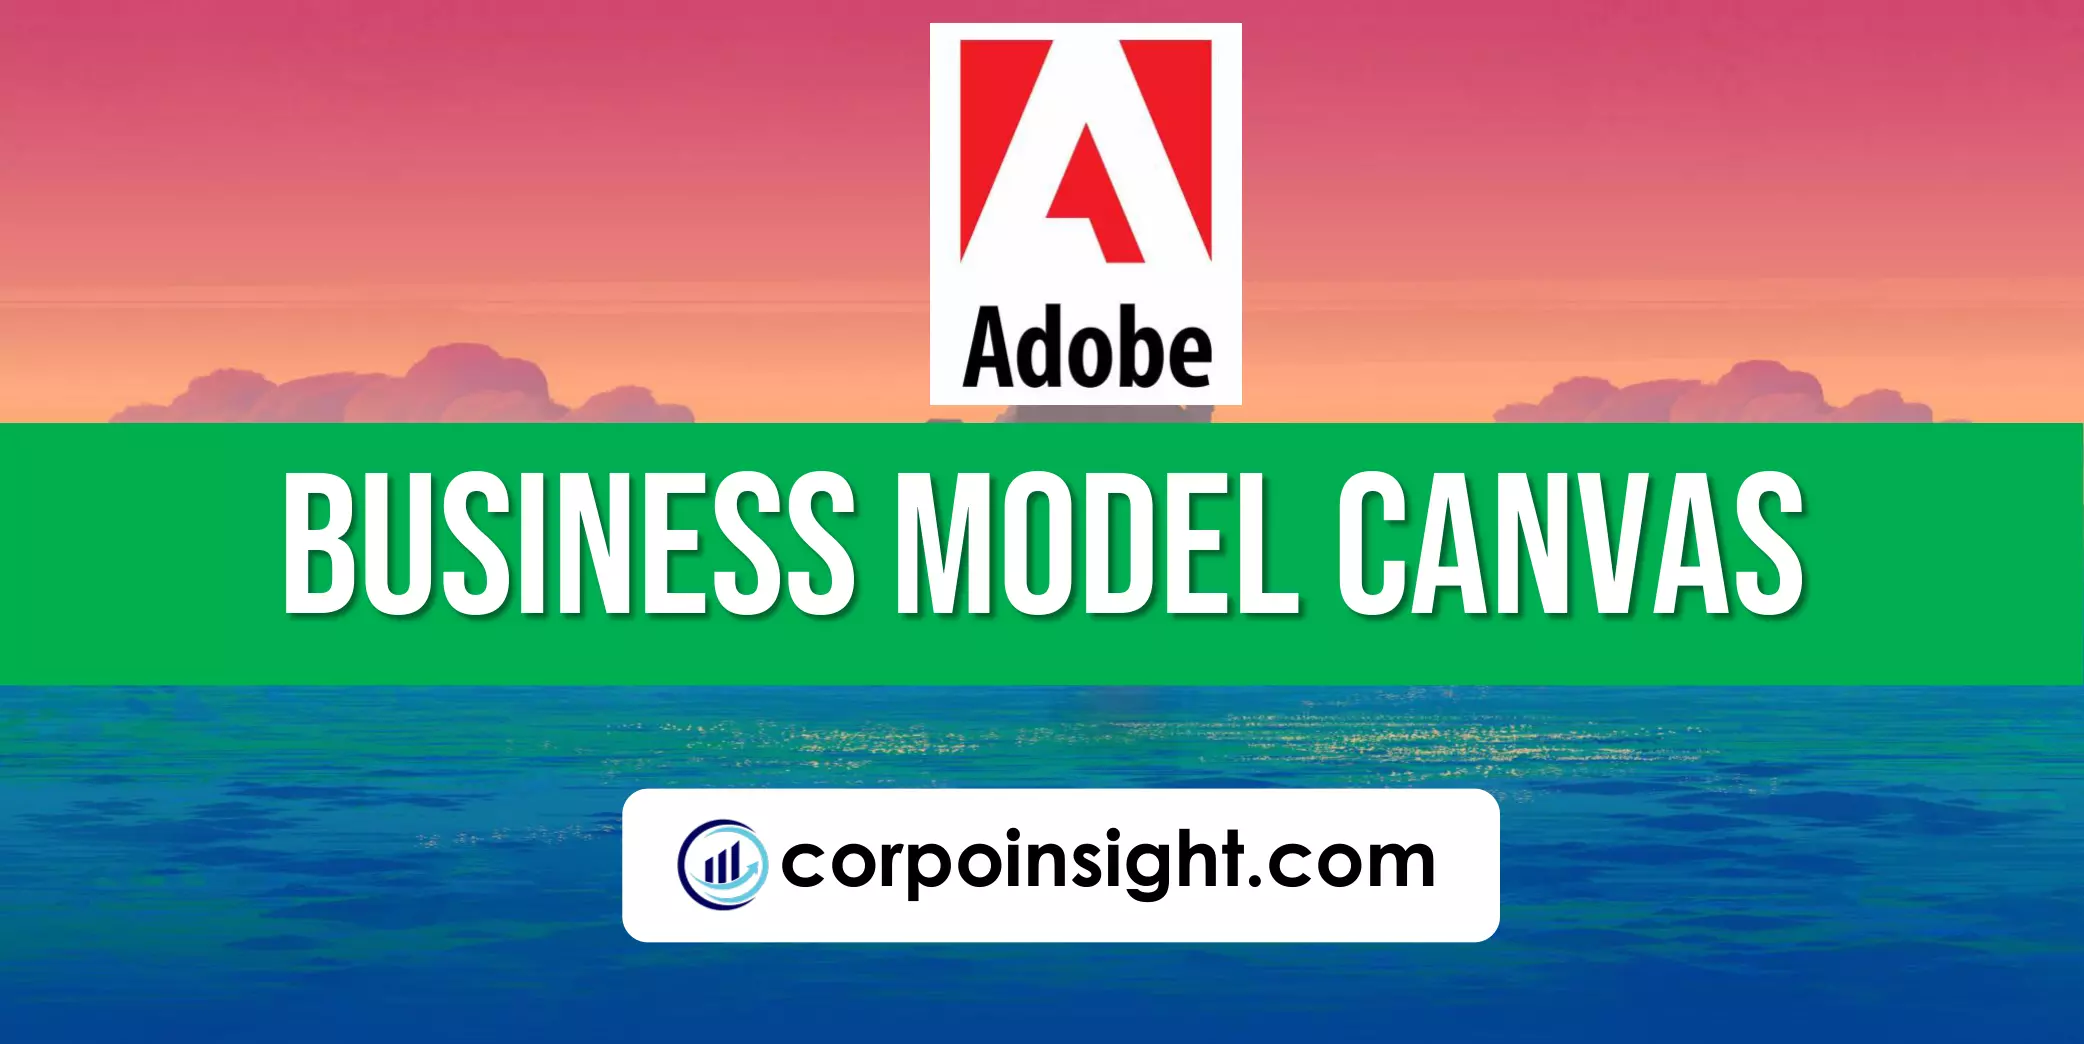 Adobe Business Model Analysis